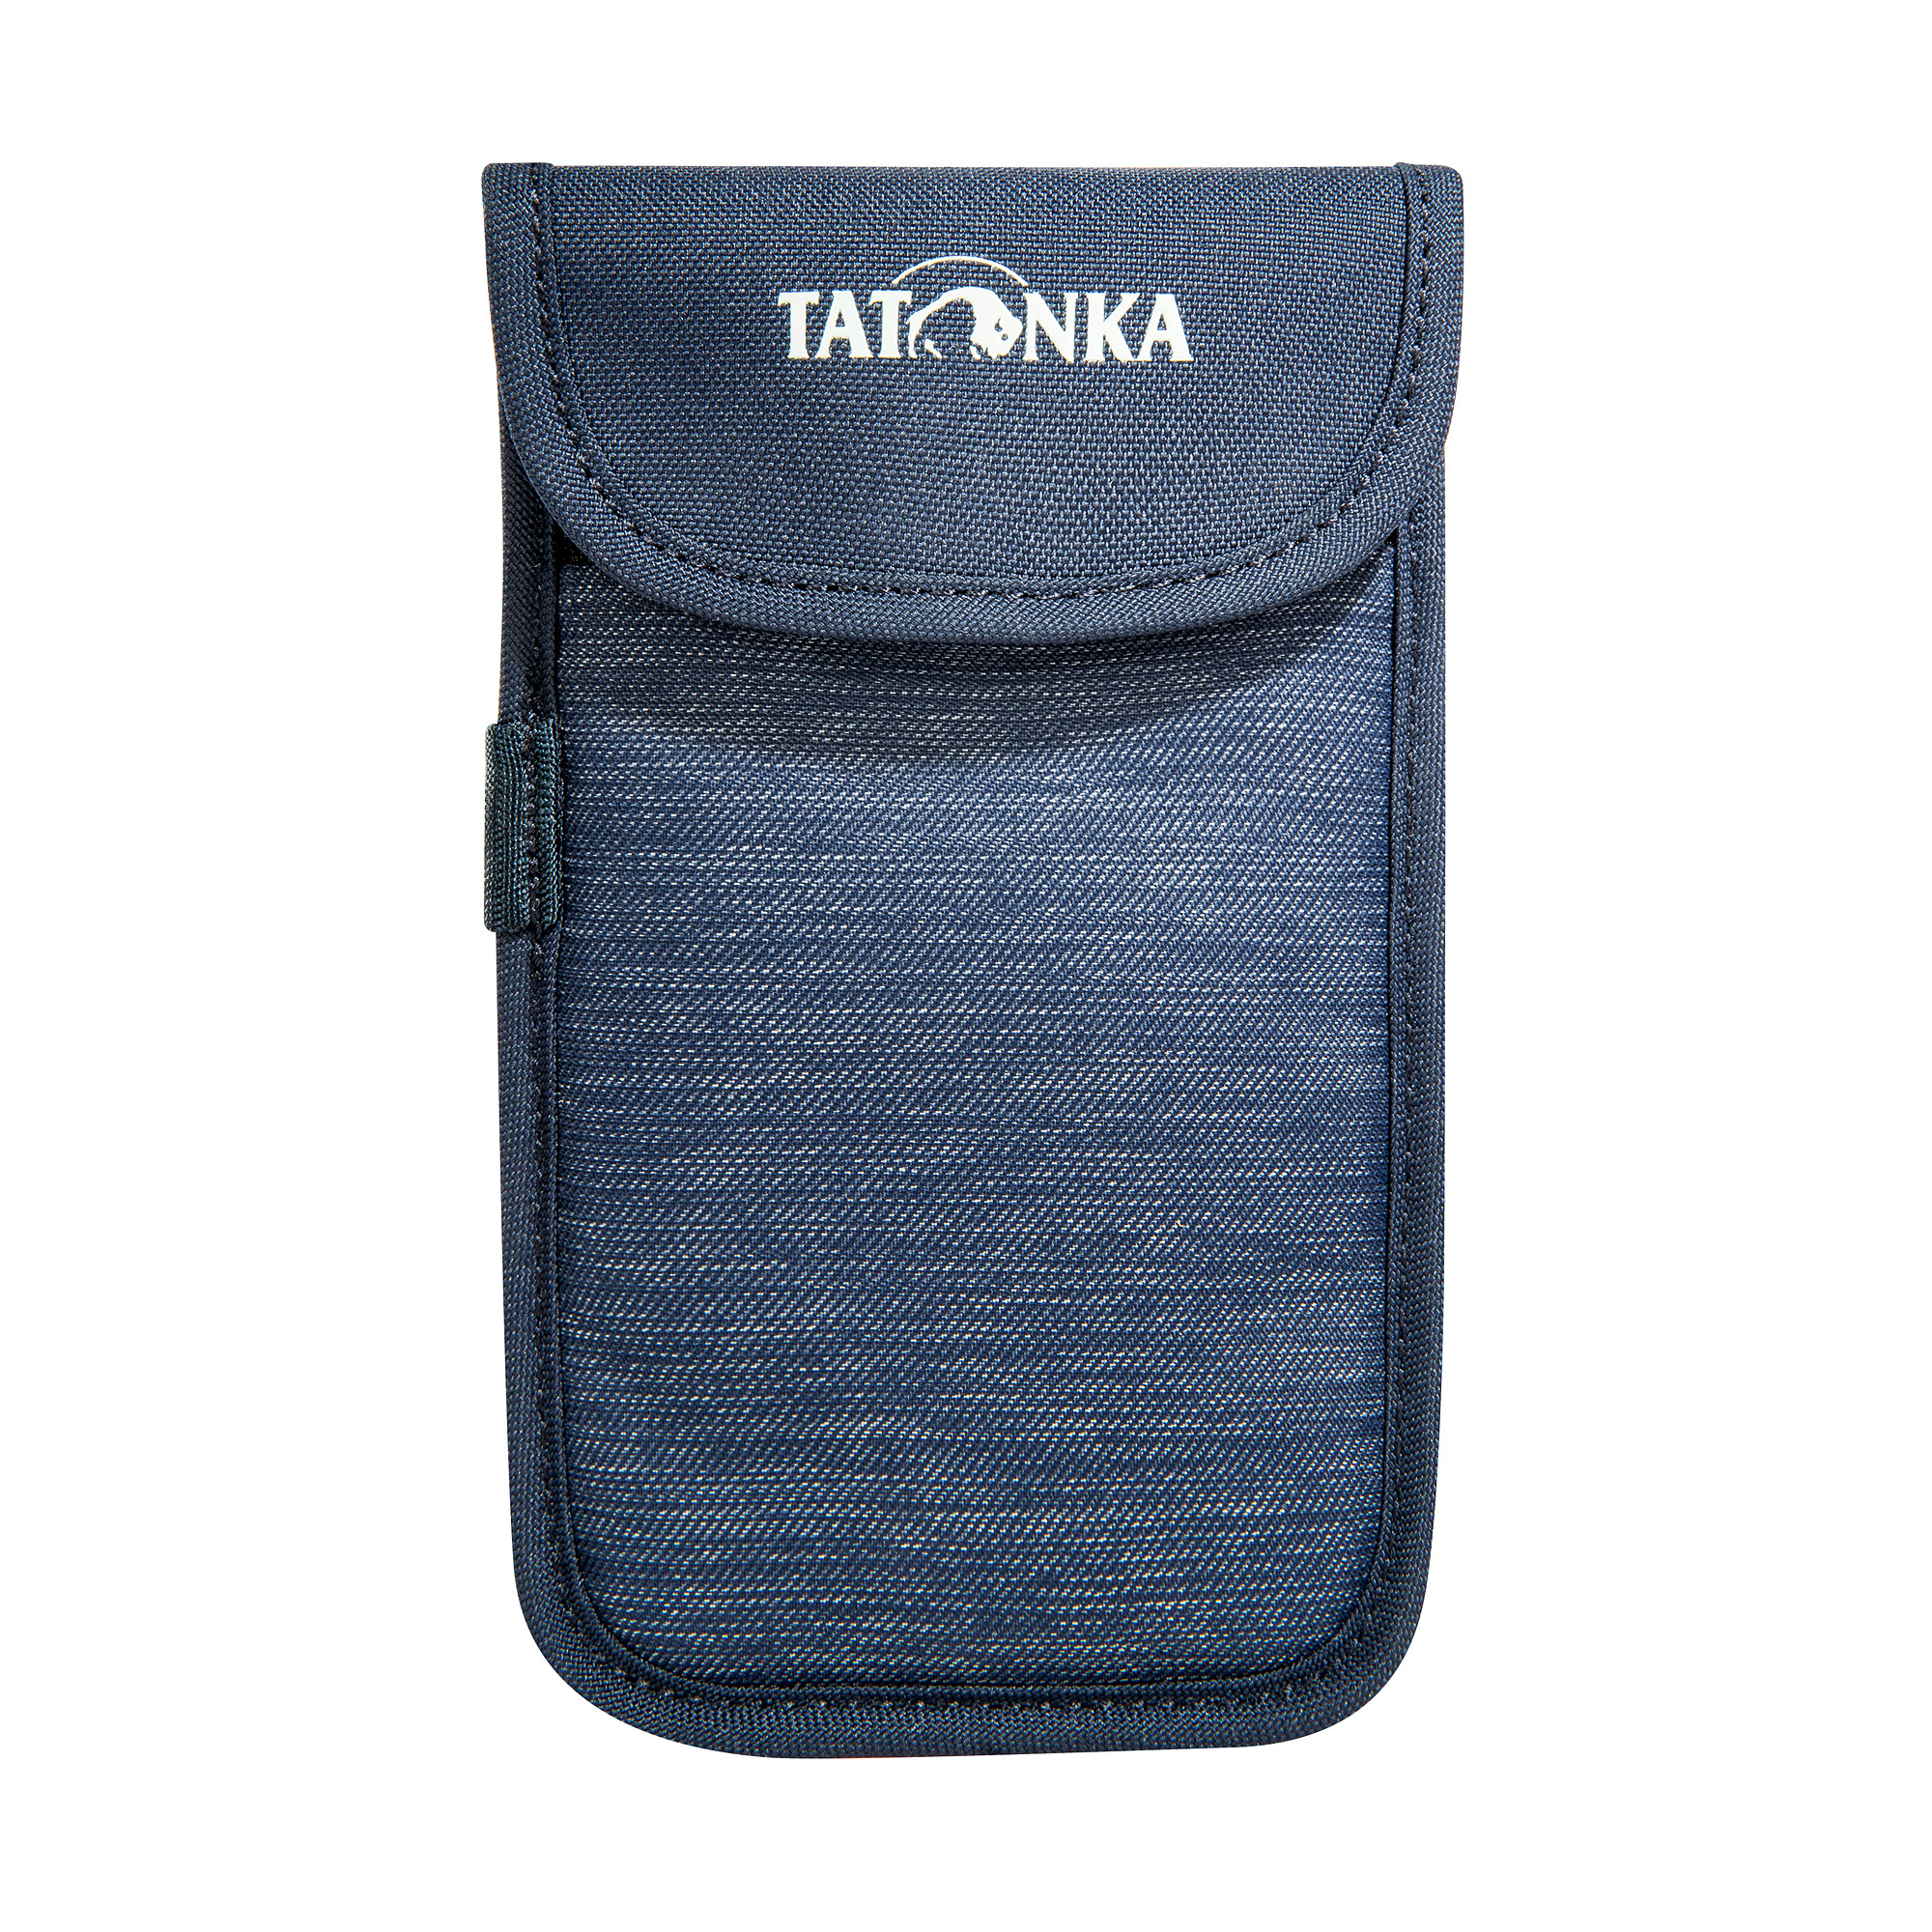 Tatonka Smartphone Case L navy blau Handyhüllen 4013236336047